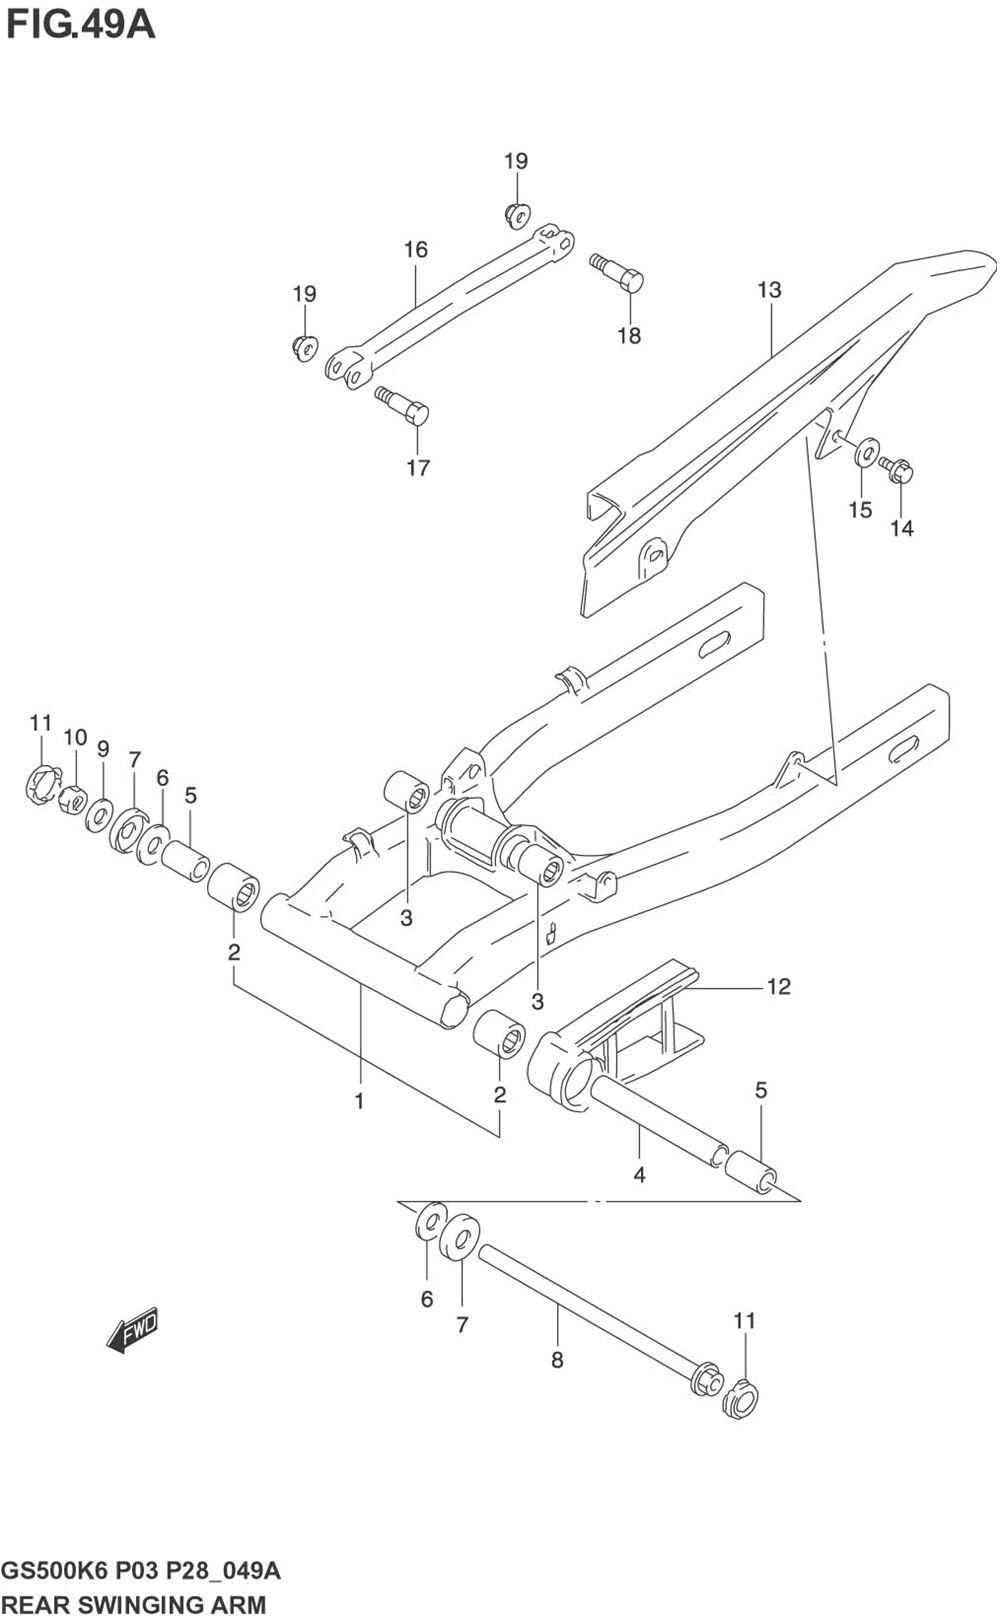 Rear swinging arm (model k4_k5_k6)